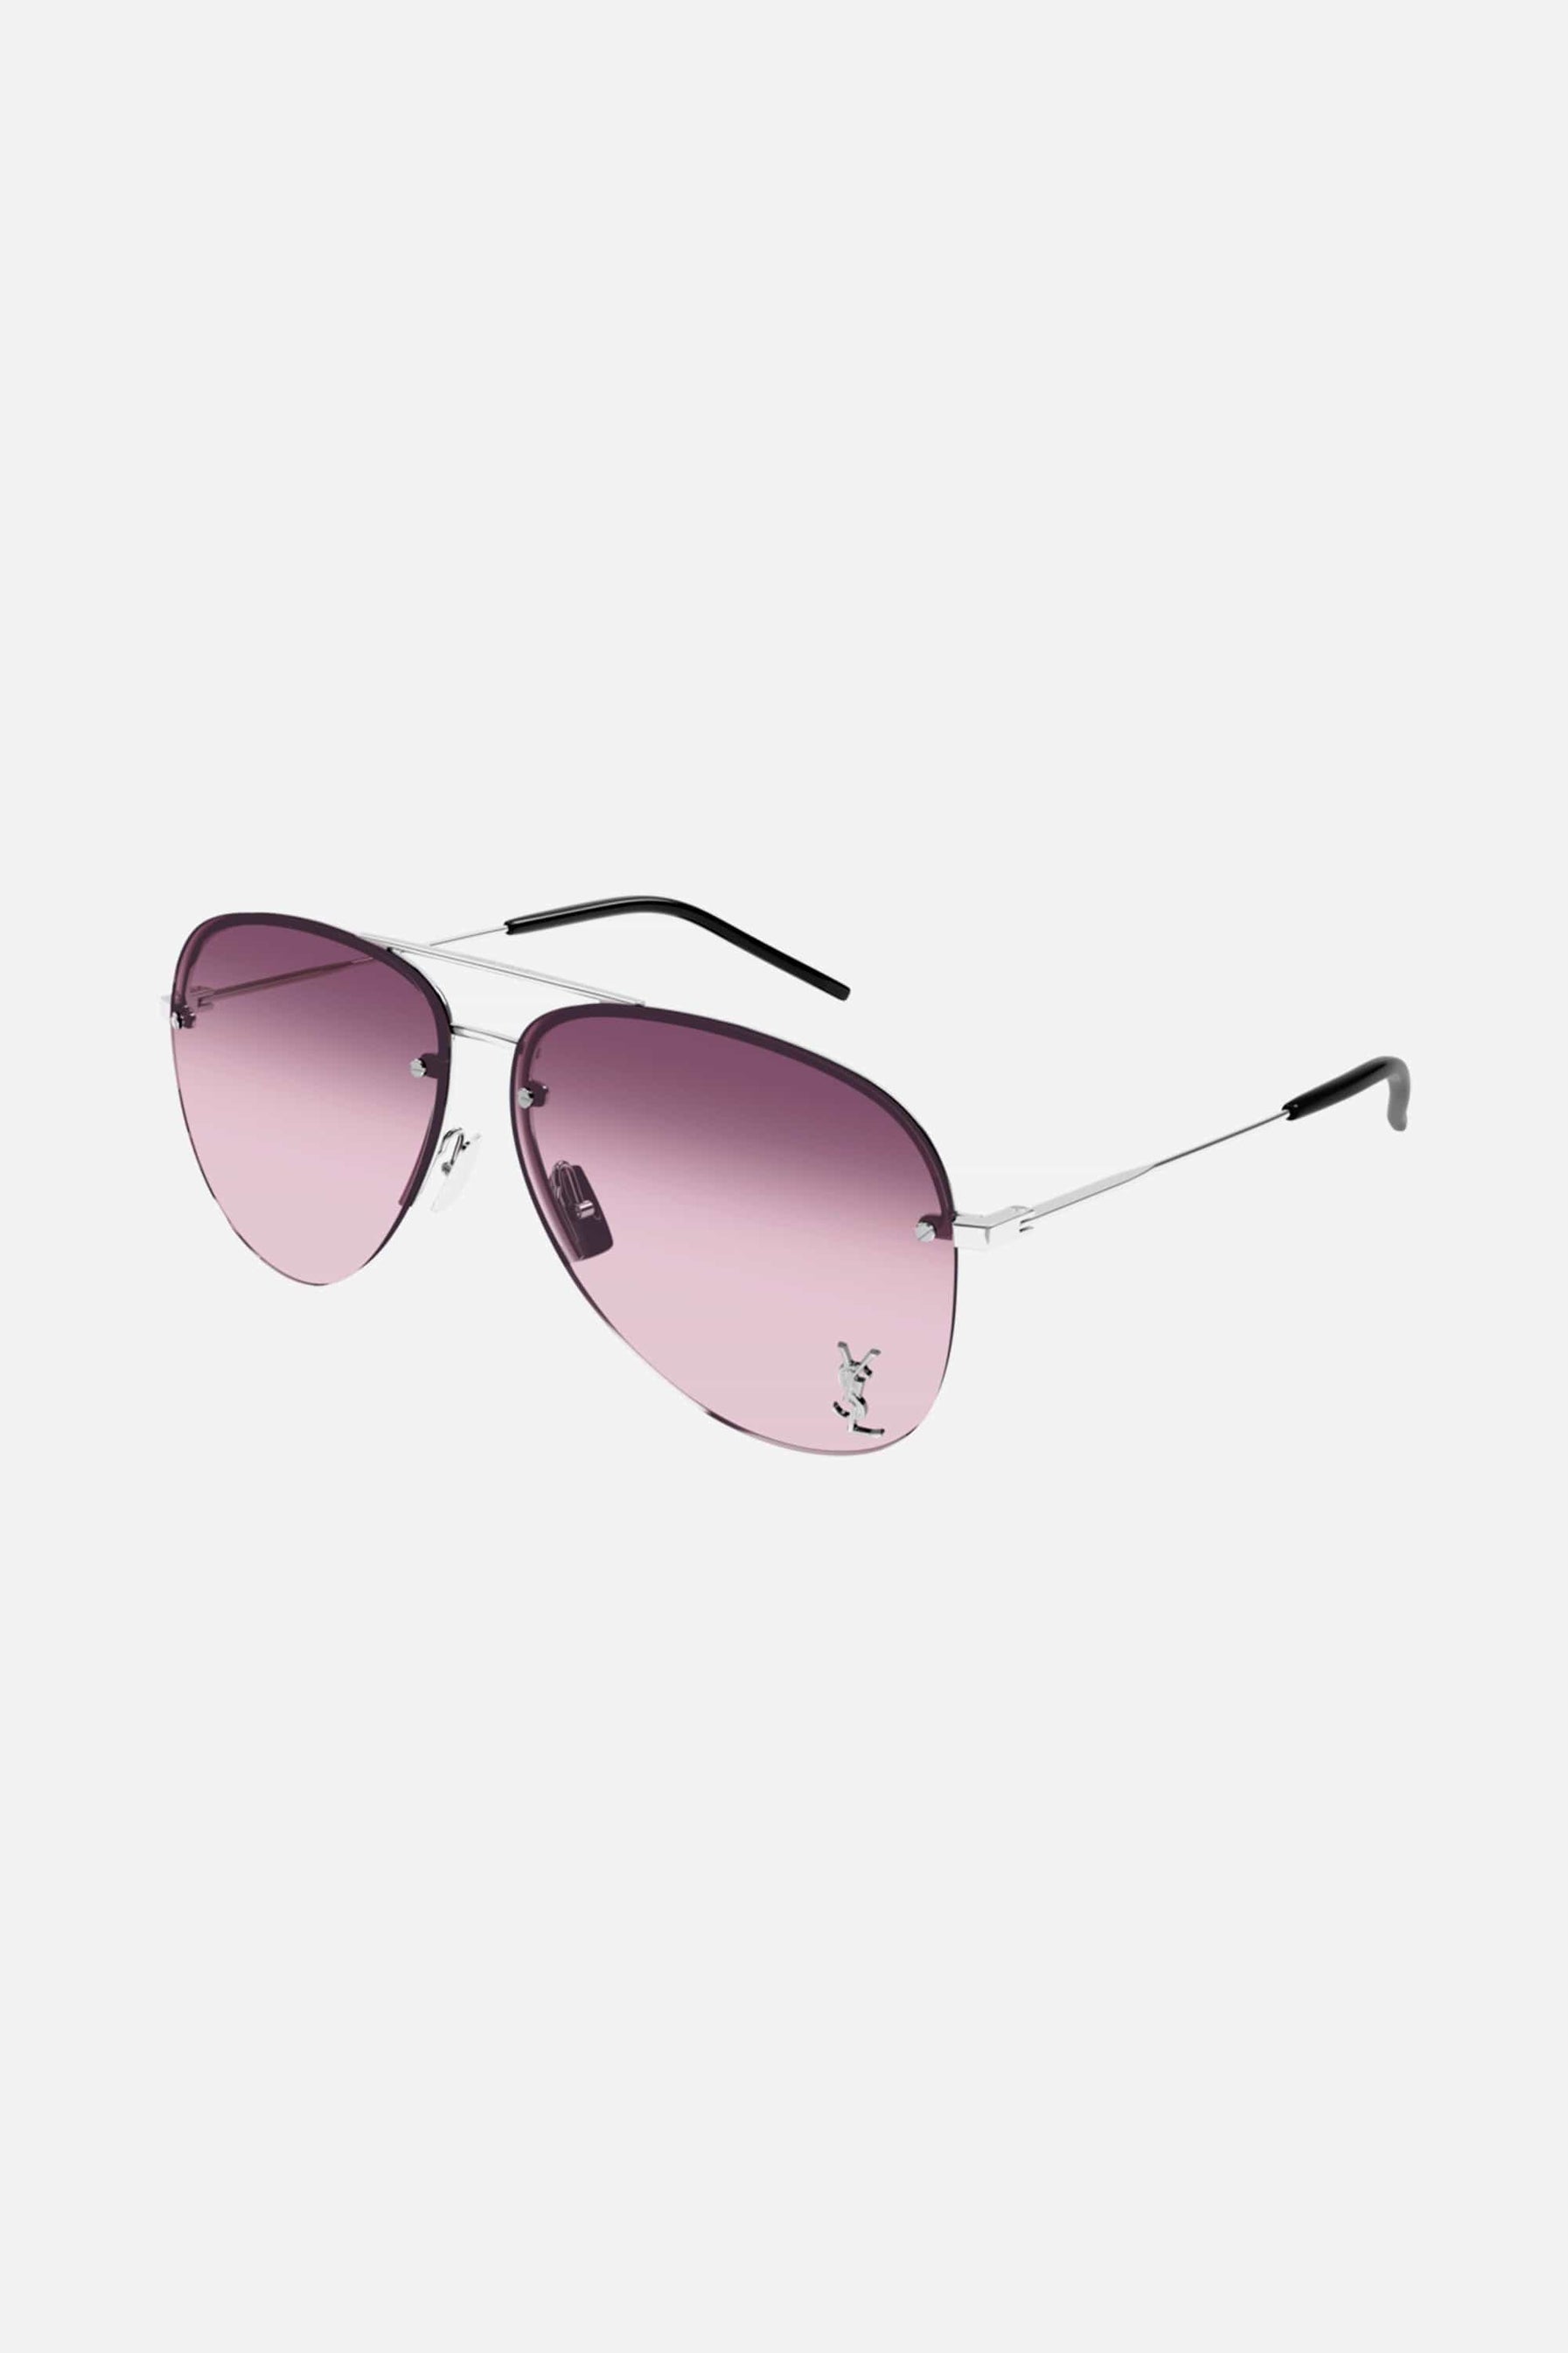 Saint Laurent pilot gradient lenses sunglasses - Eyewear Club